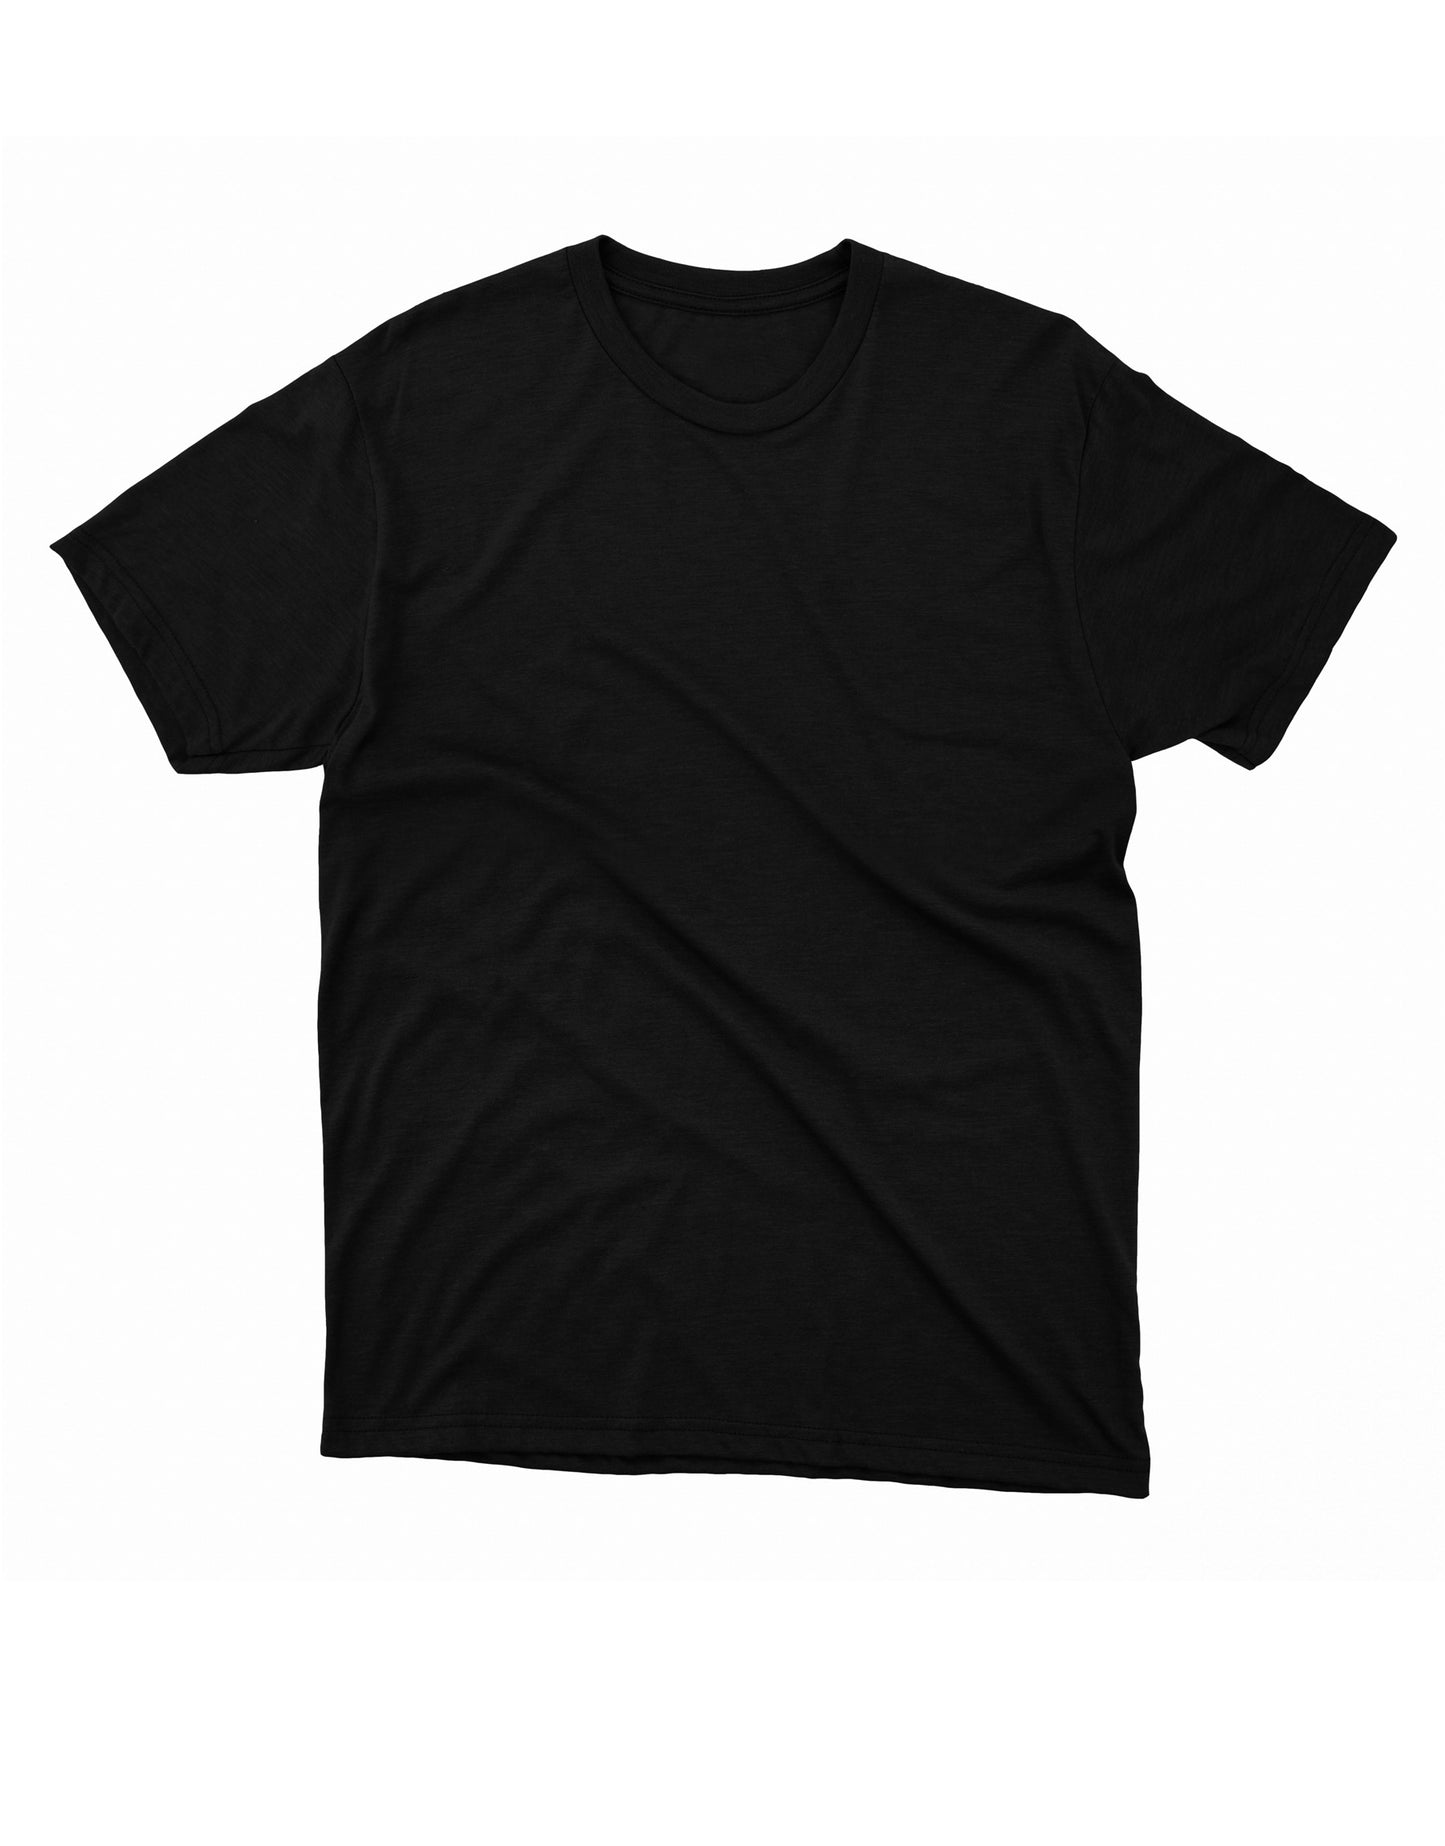 Customizable Name/Slogan/Quotes Printed Unisex T-Shirt